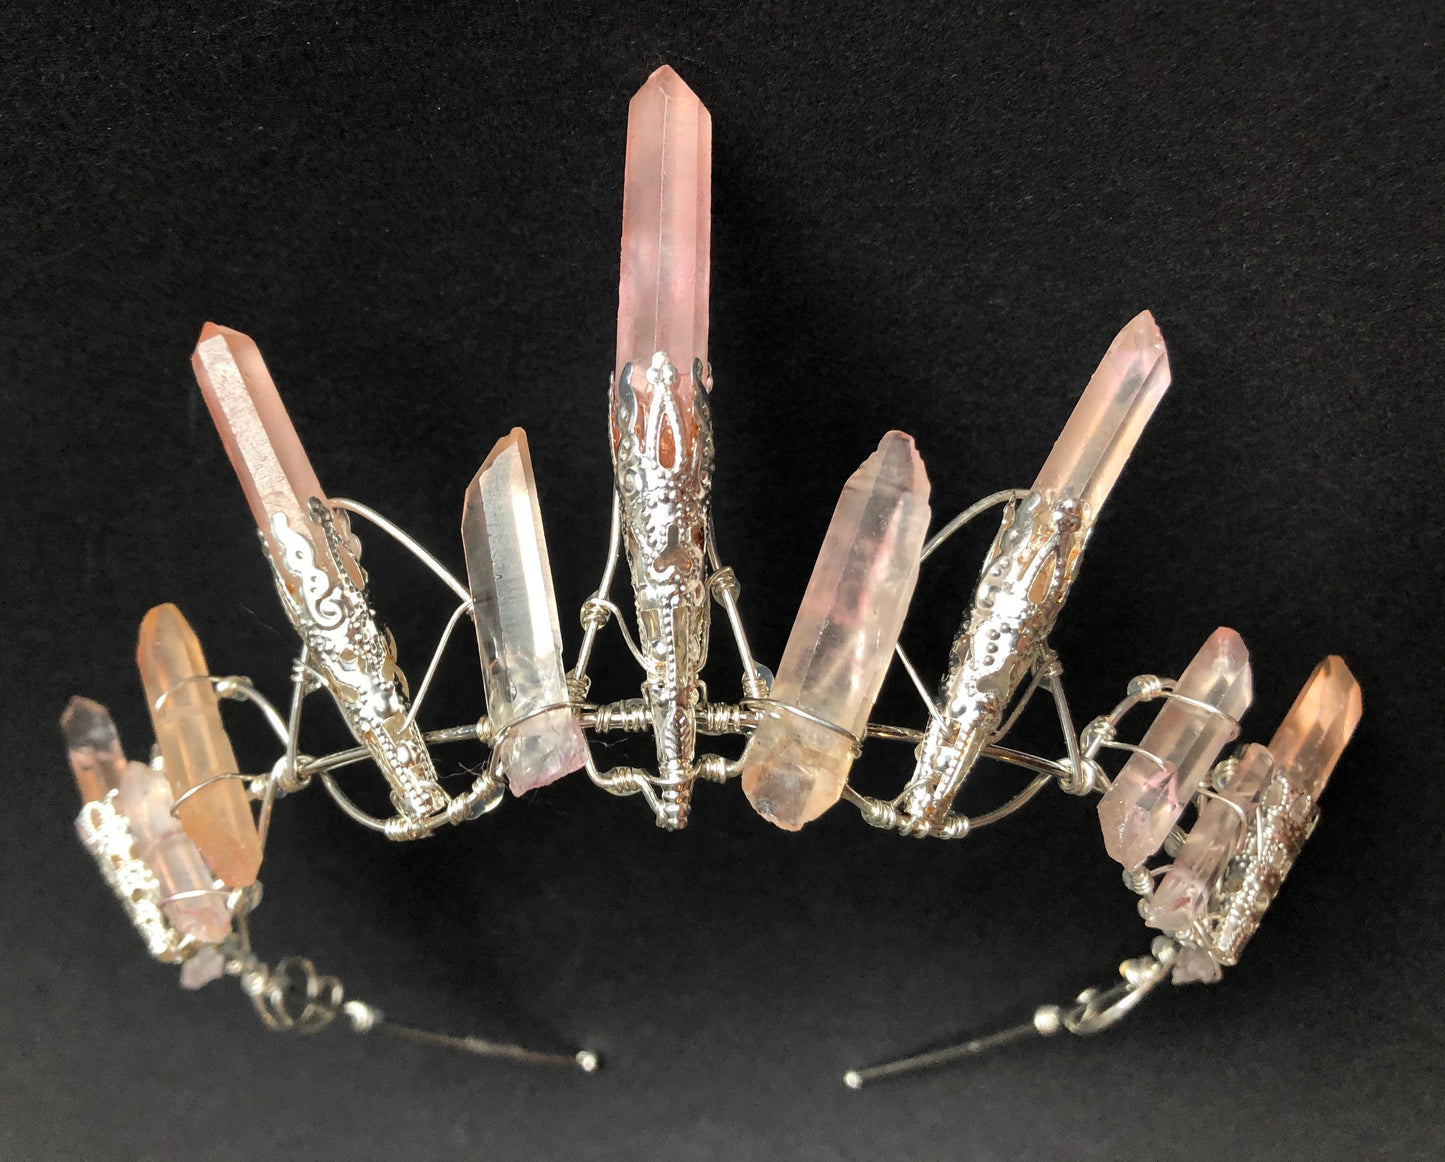 The ROSE CELESTE Pink Quartz Crown